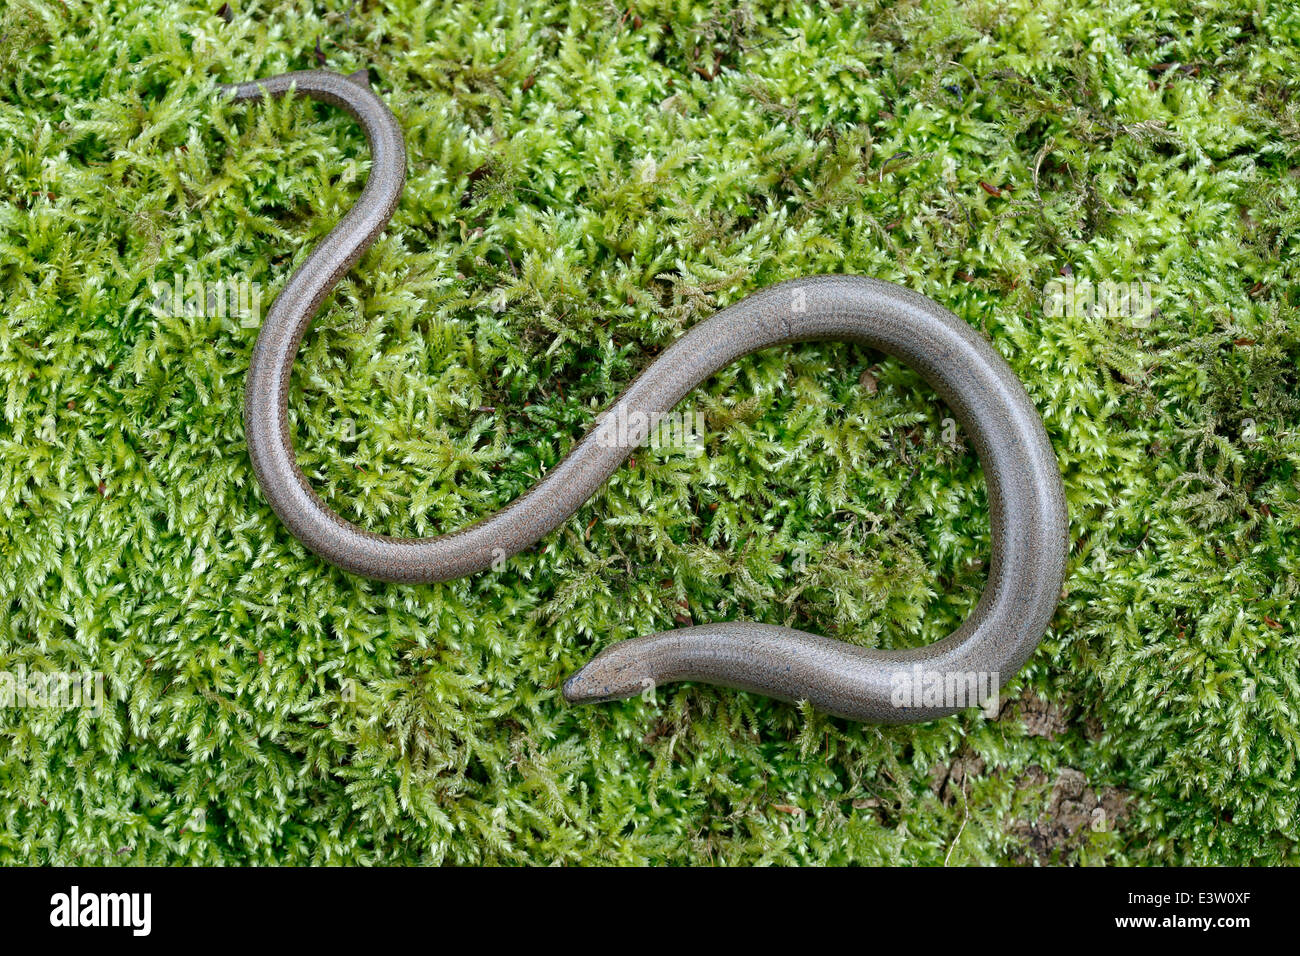 Slow worm, Anguis fragilis, single reptile, Warwickshire, May 2014 Stock Photo